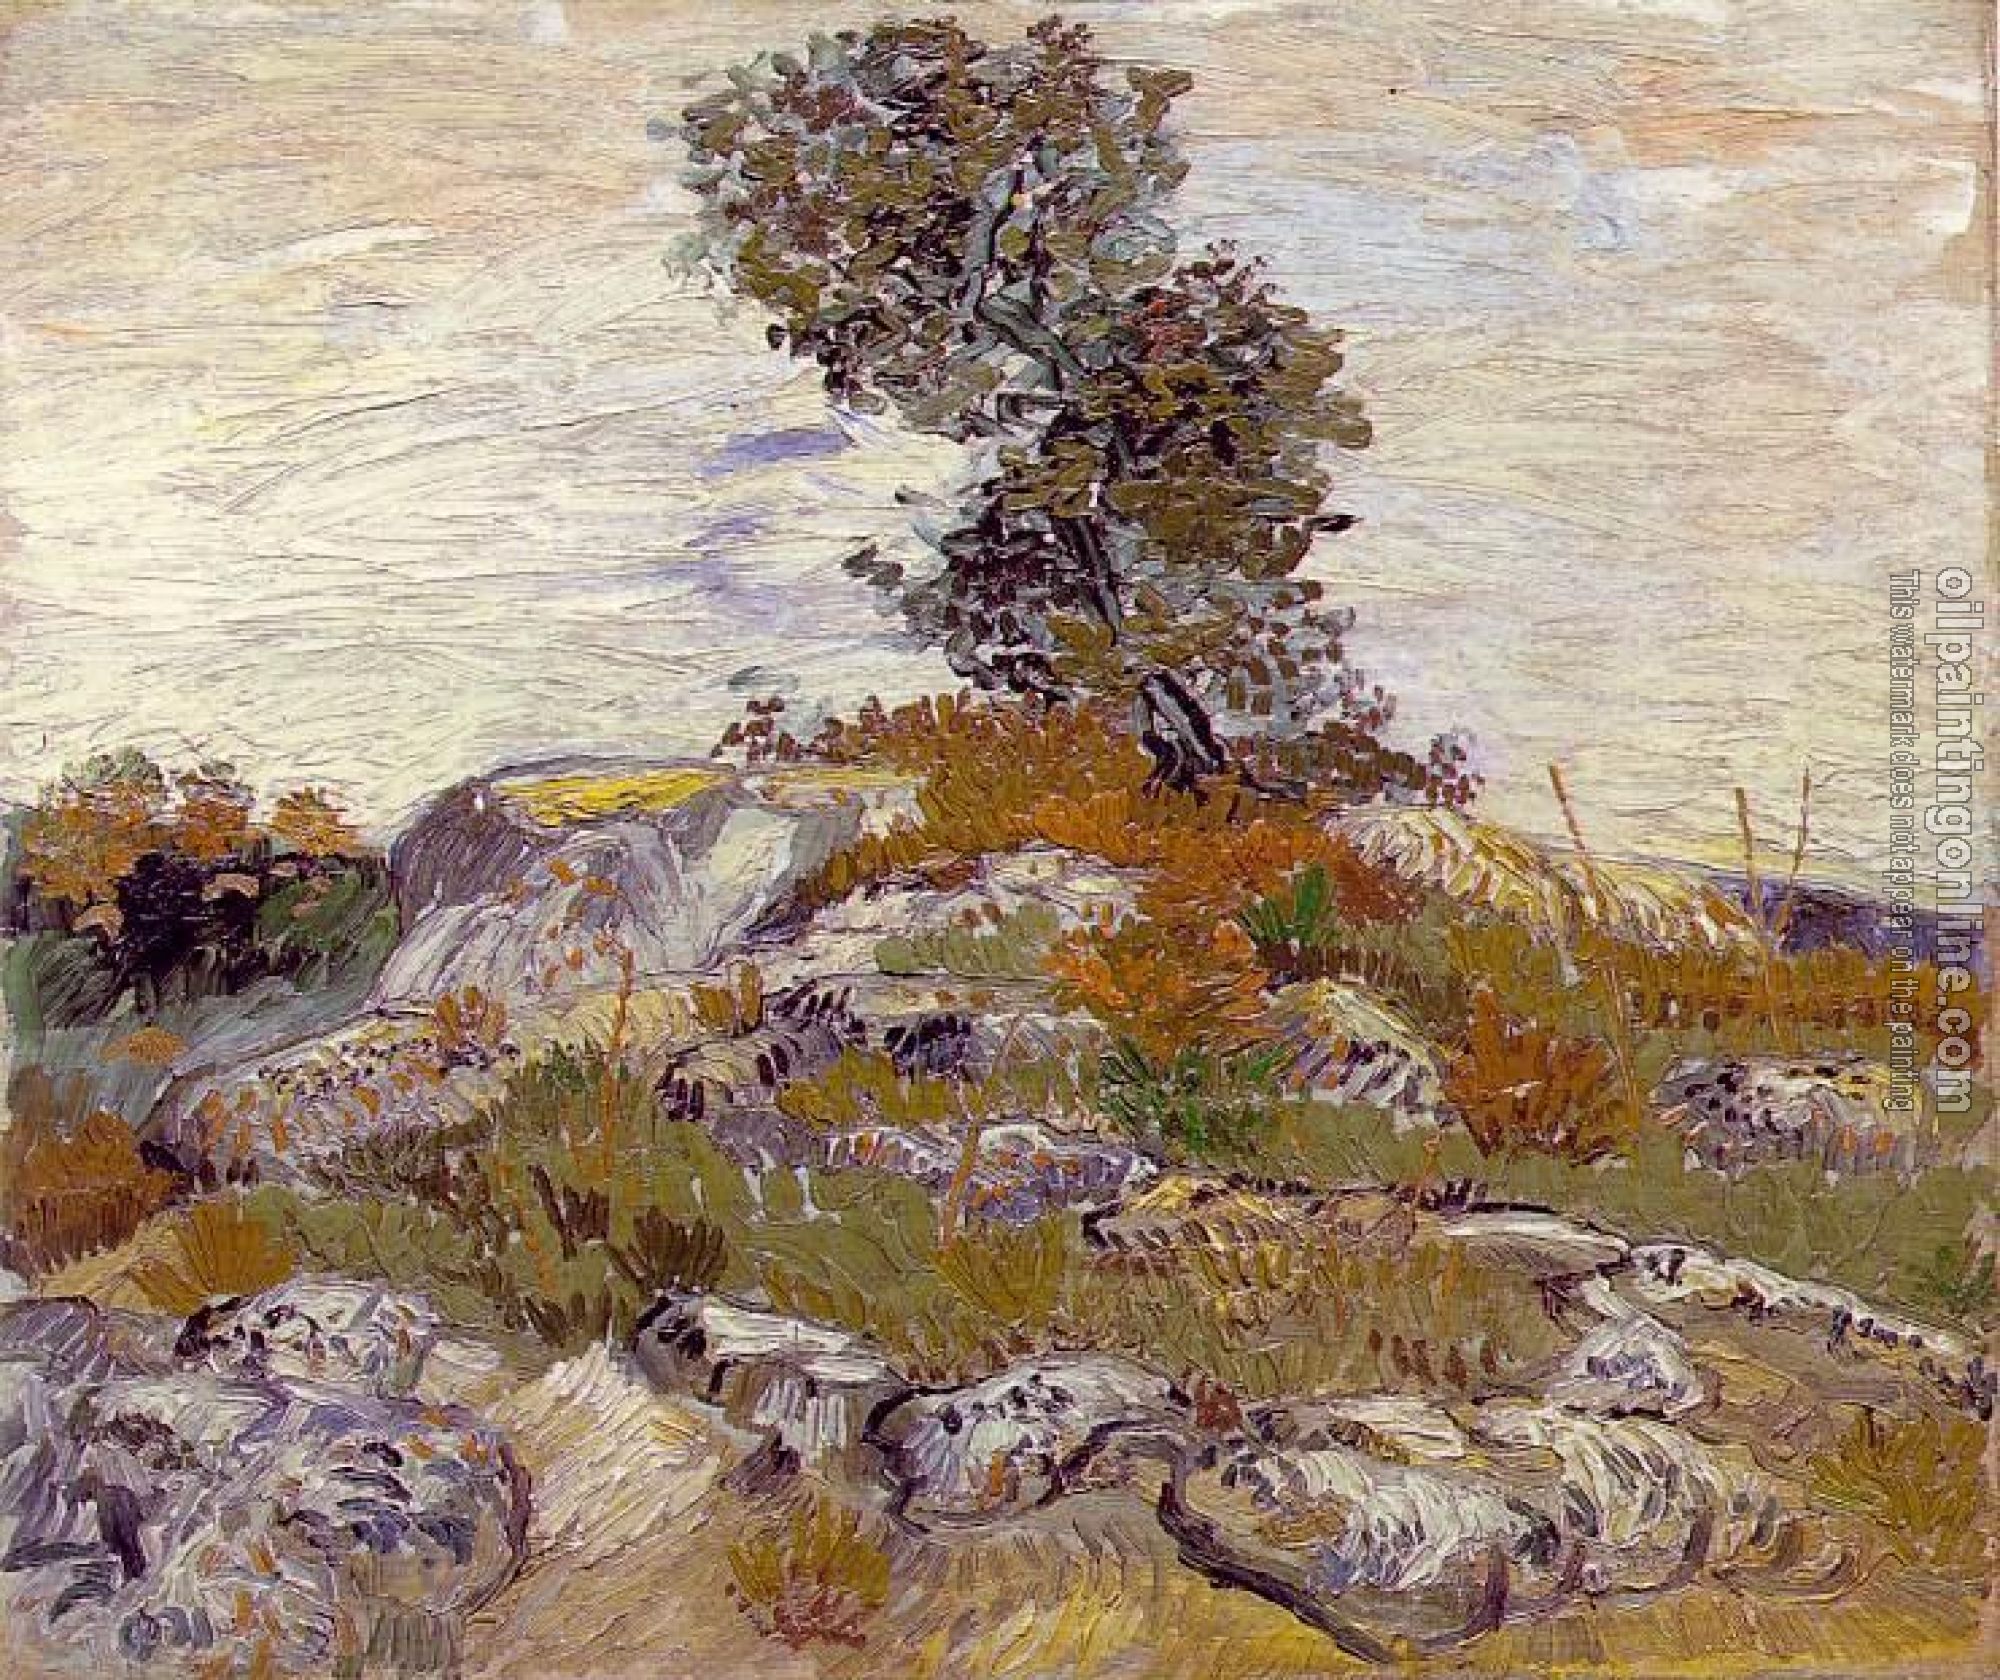 Gogh, Vincent van - Rocks with Oak Tree